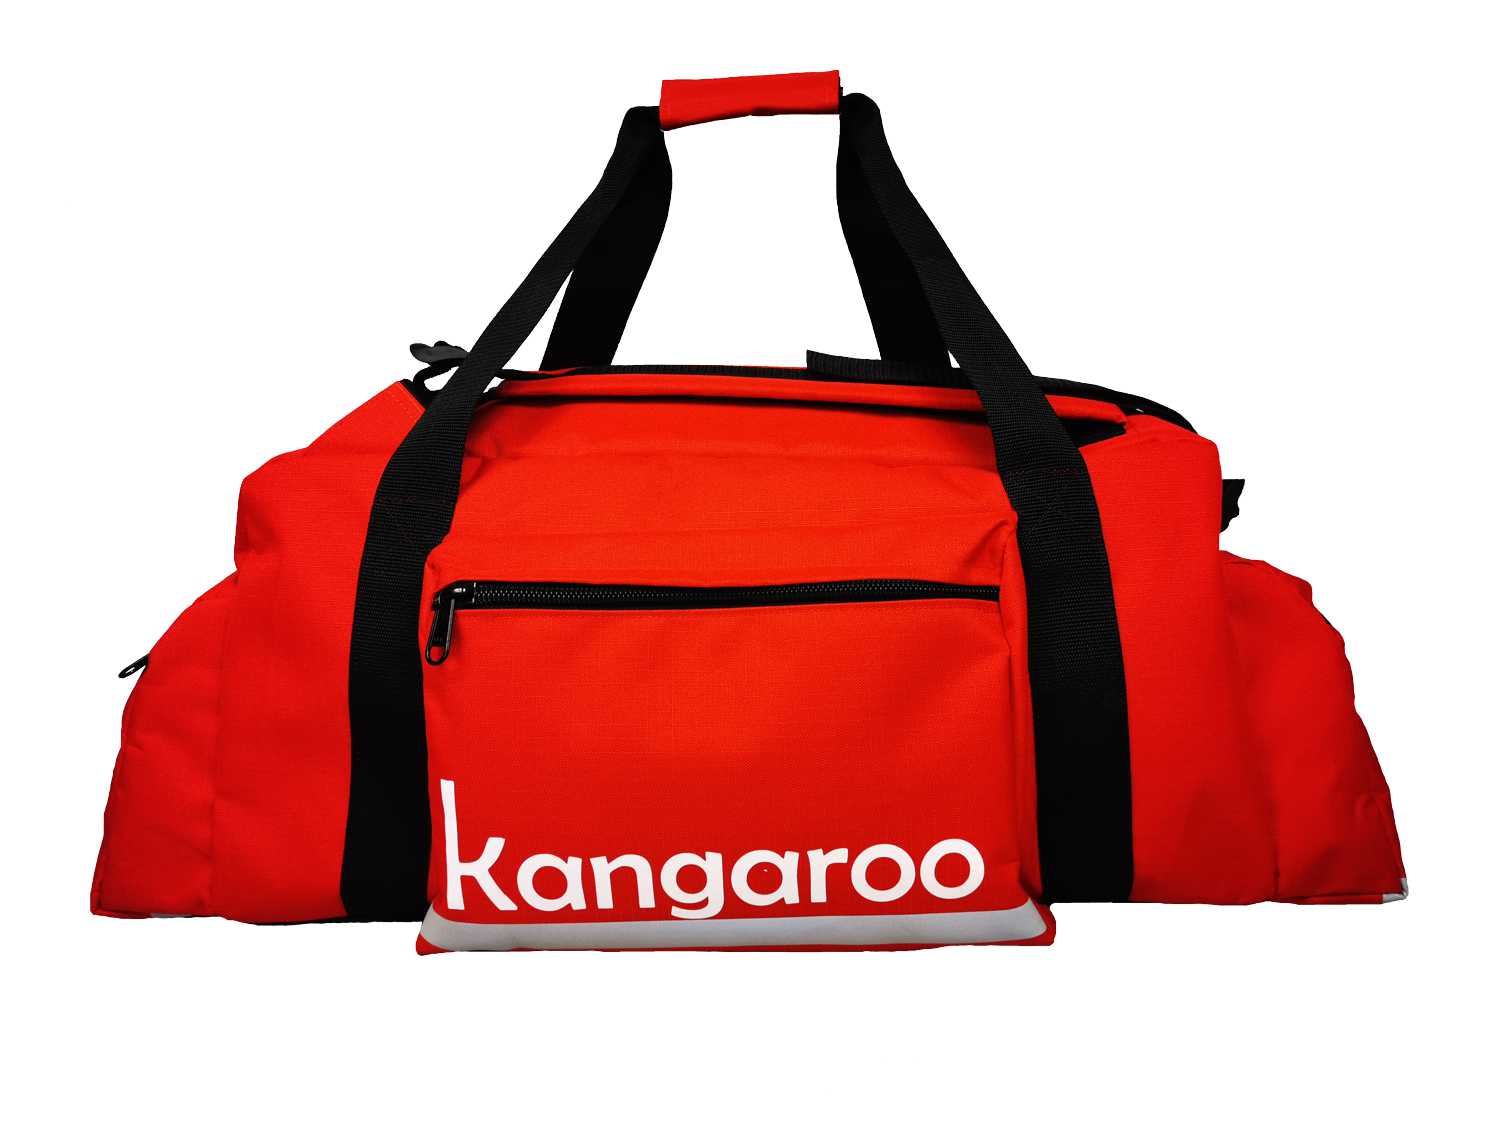 Torbo Plecak Kangaroo 2 w 1 – czerwony – Kangaroo